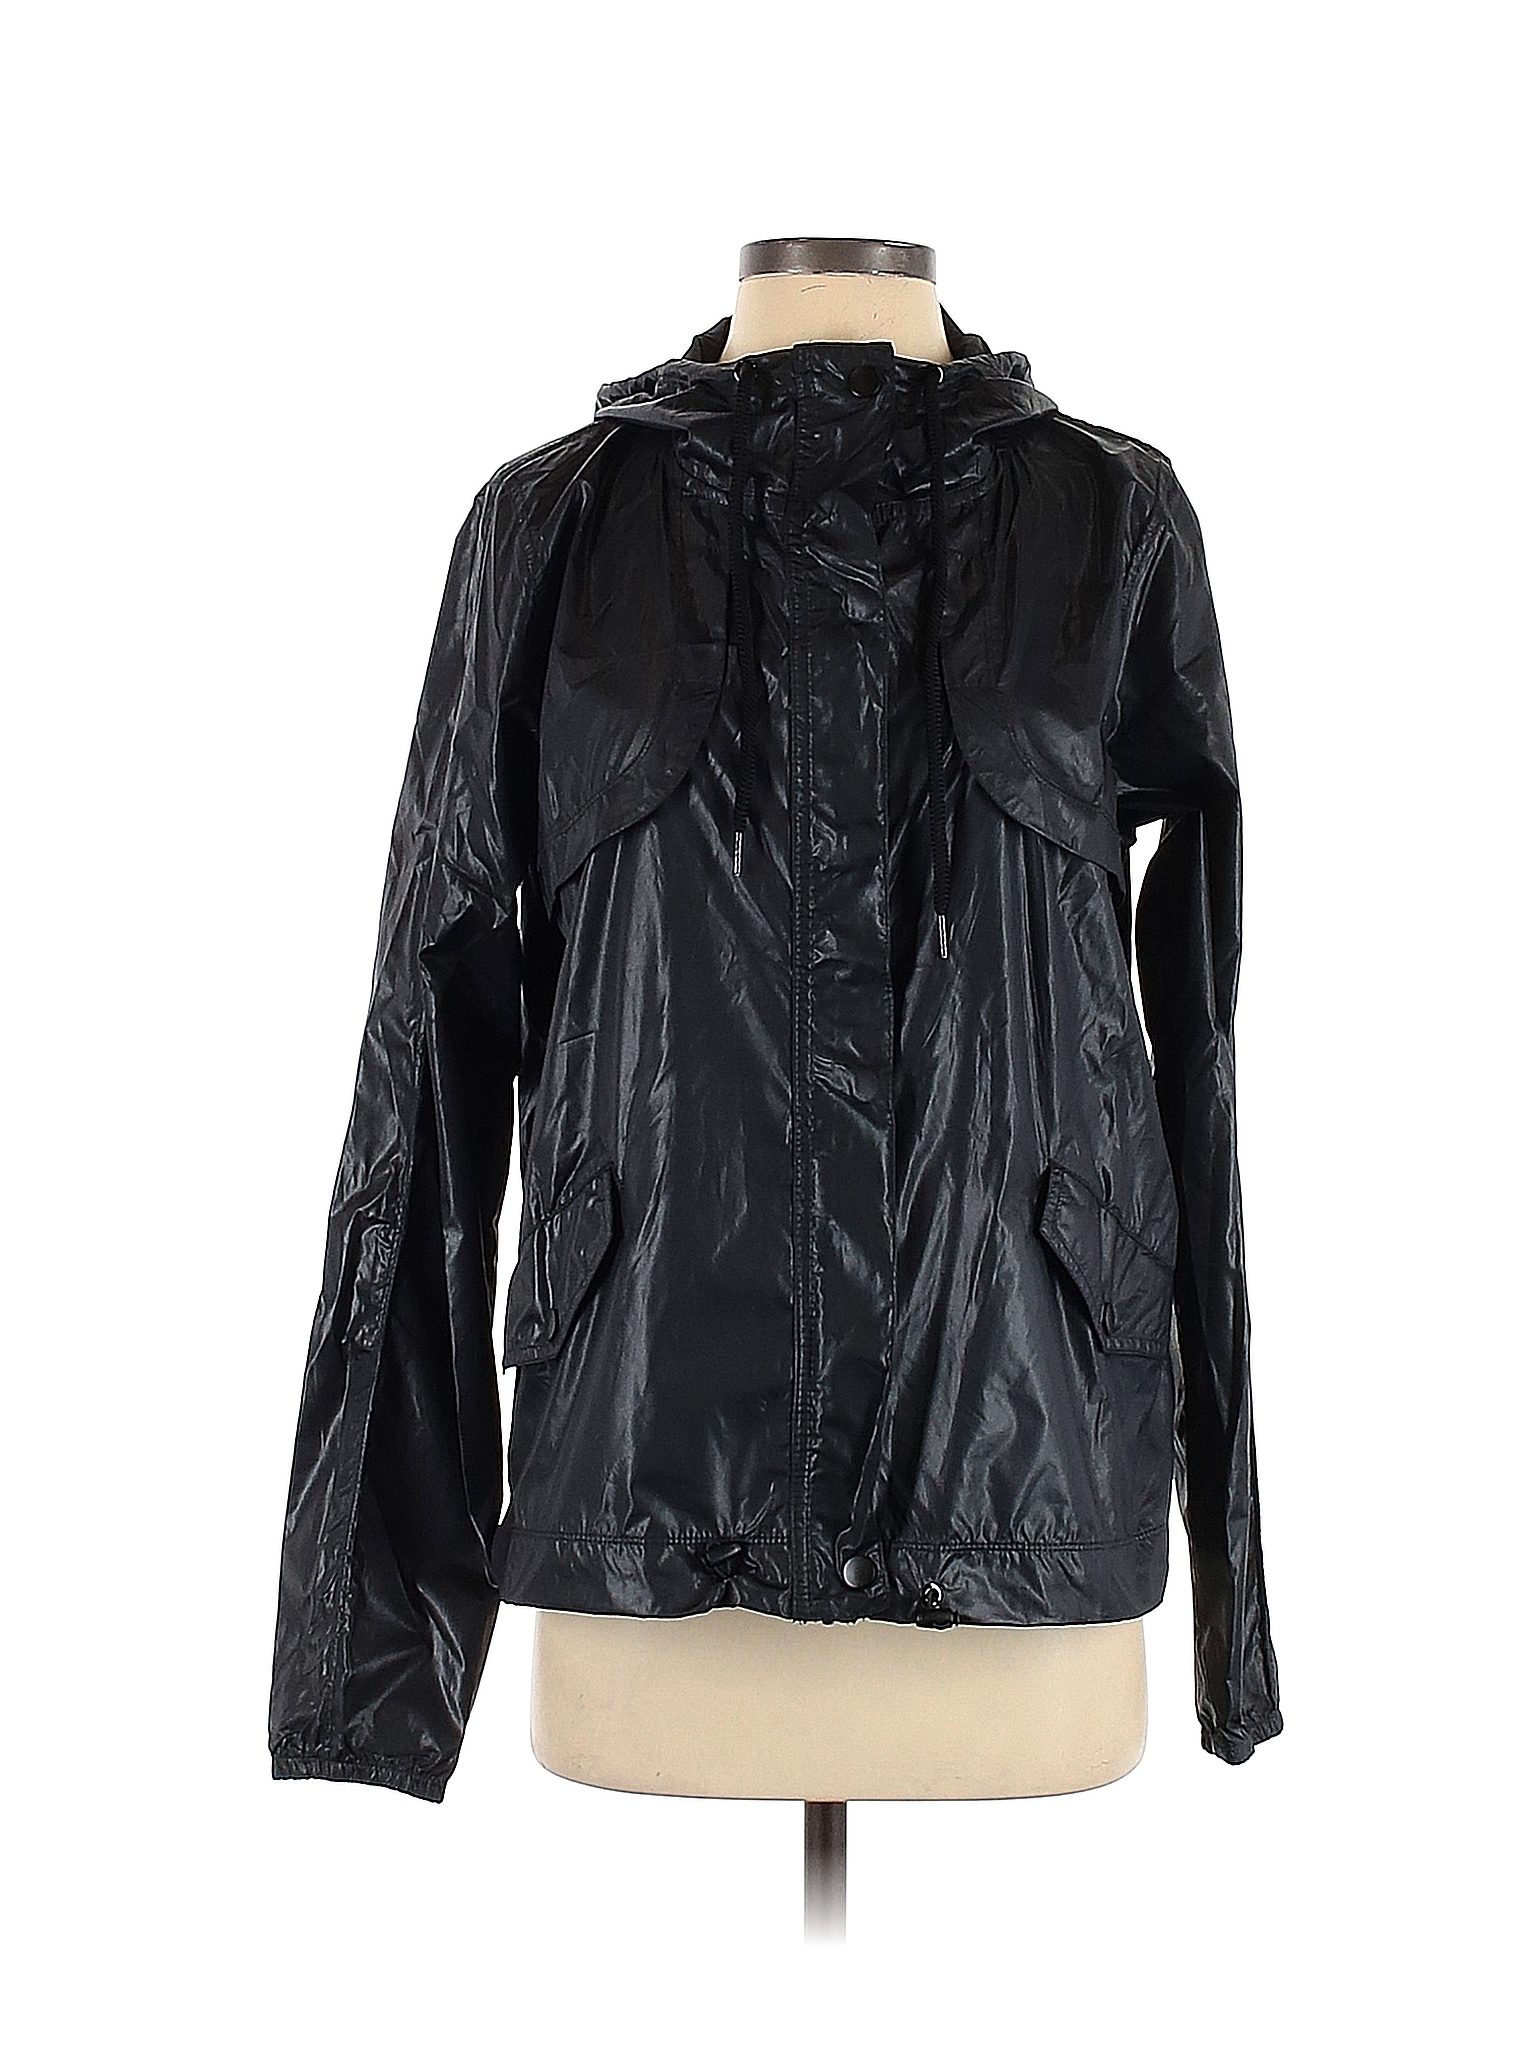 Layer 8 100% Polyester Black Jacket Size M - 81% off | thredUP